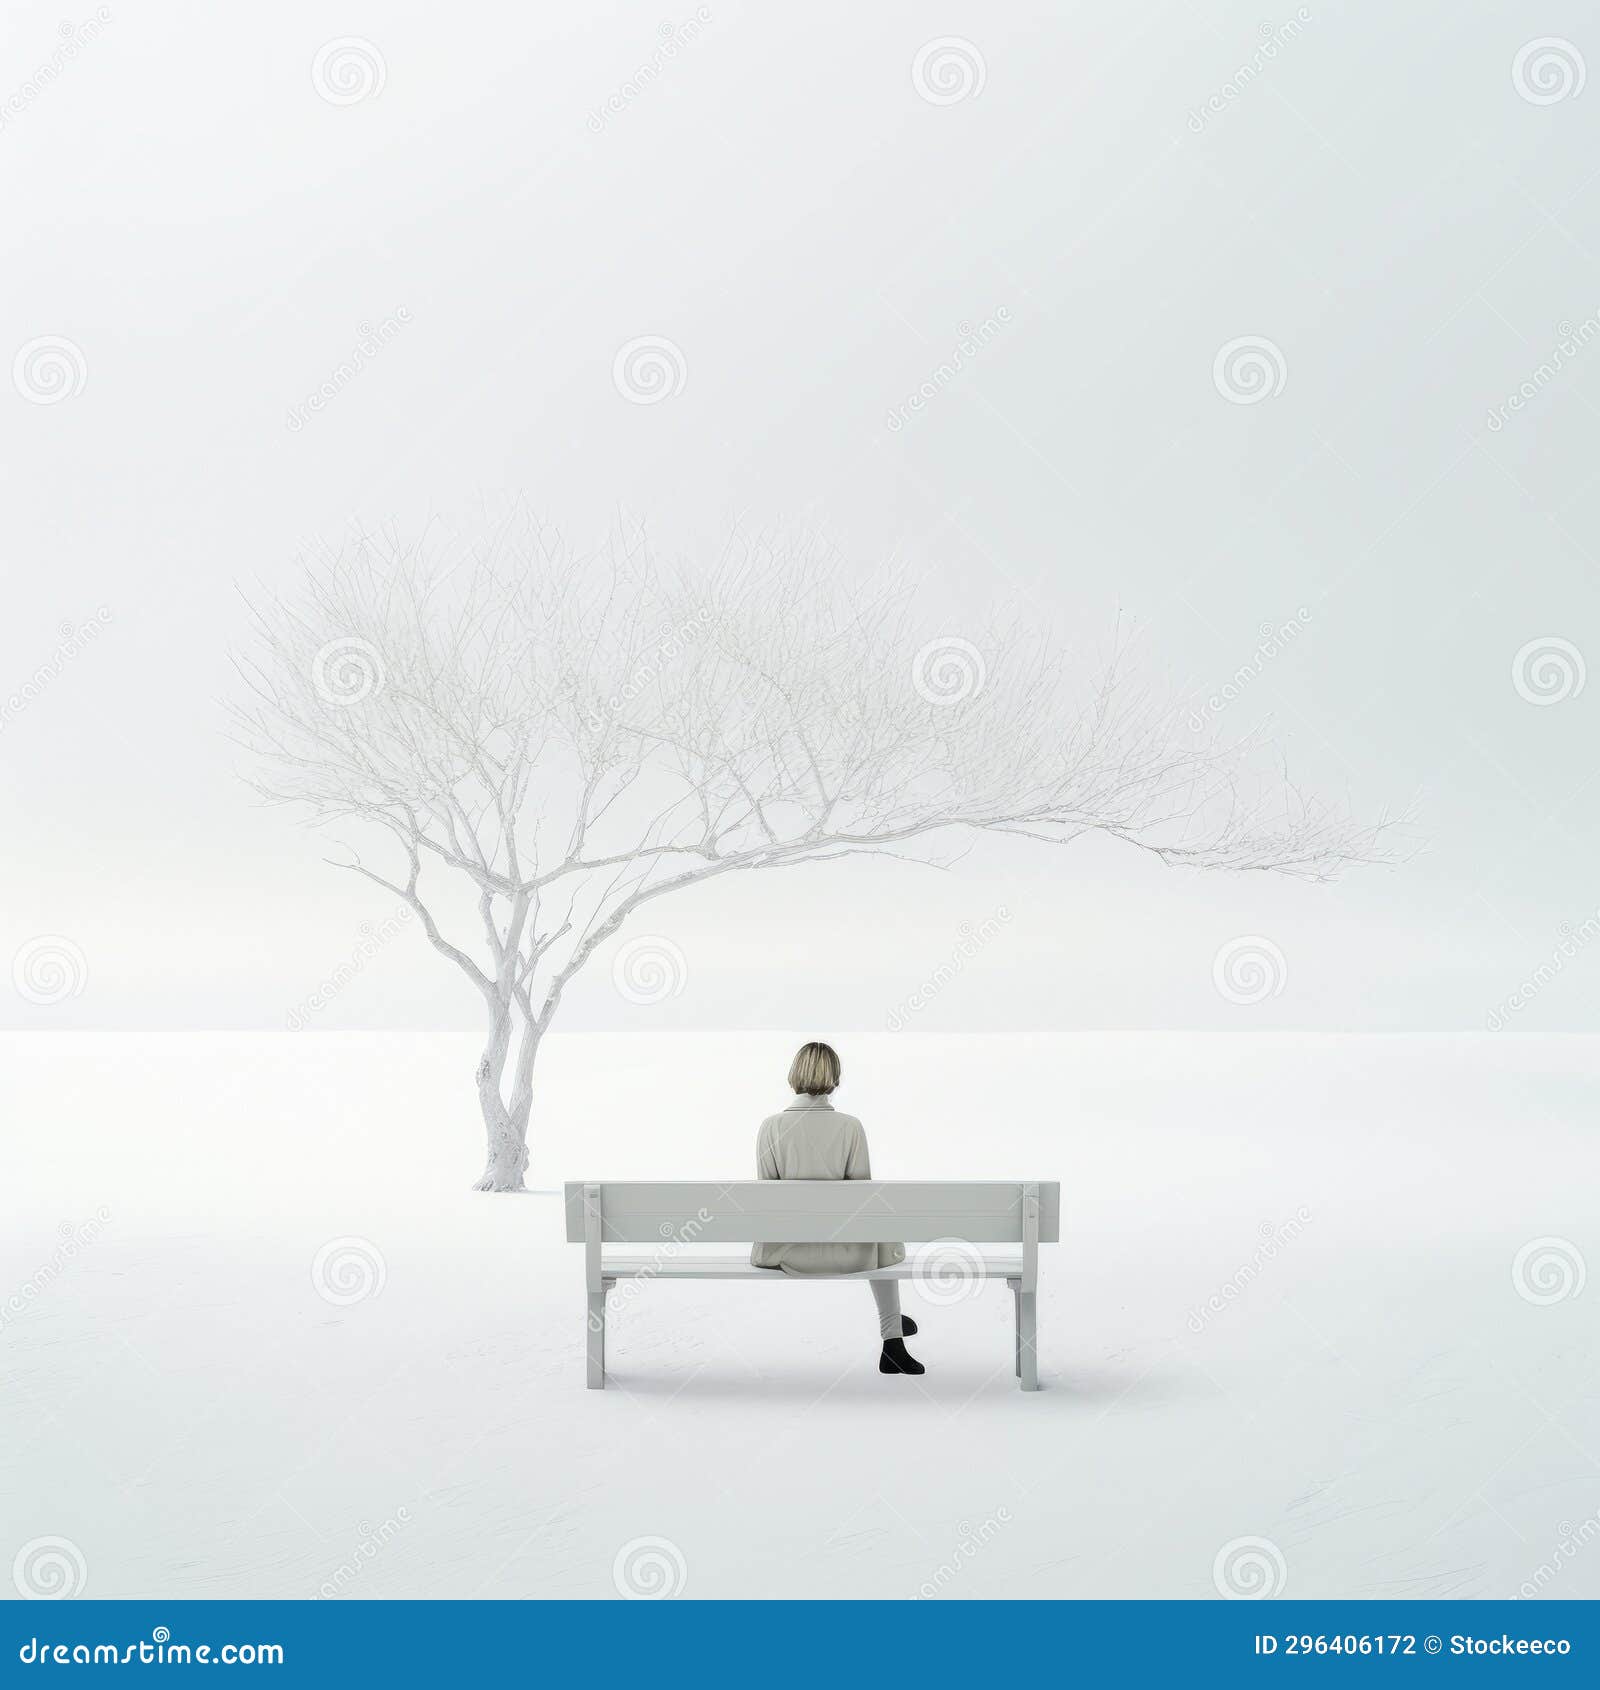 lonely surrealist portrait: minimalist bench in snow